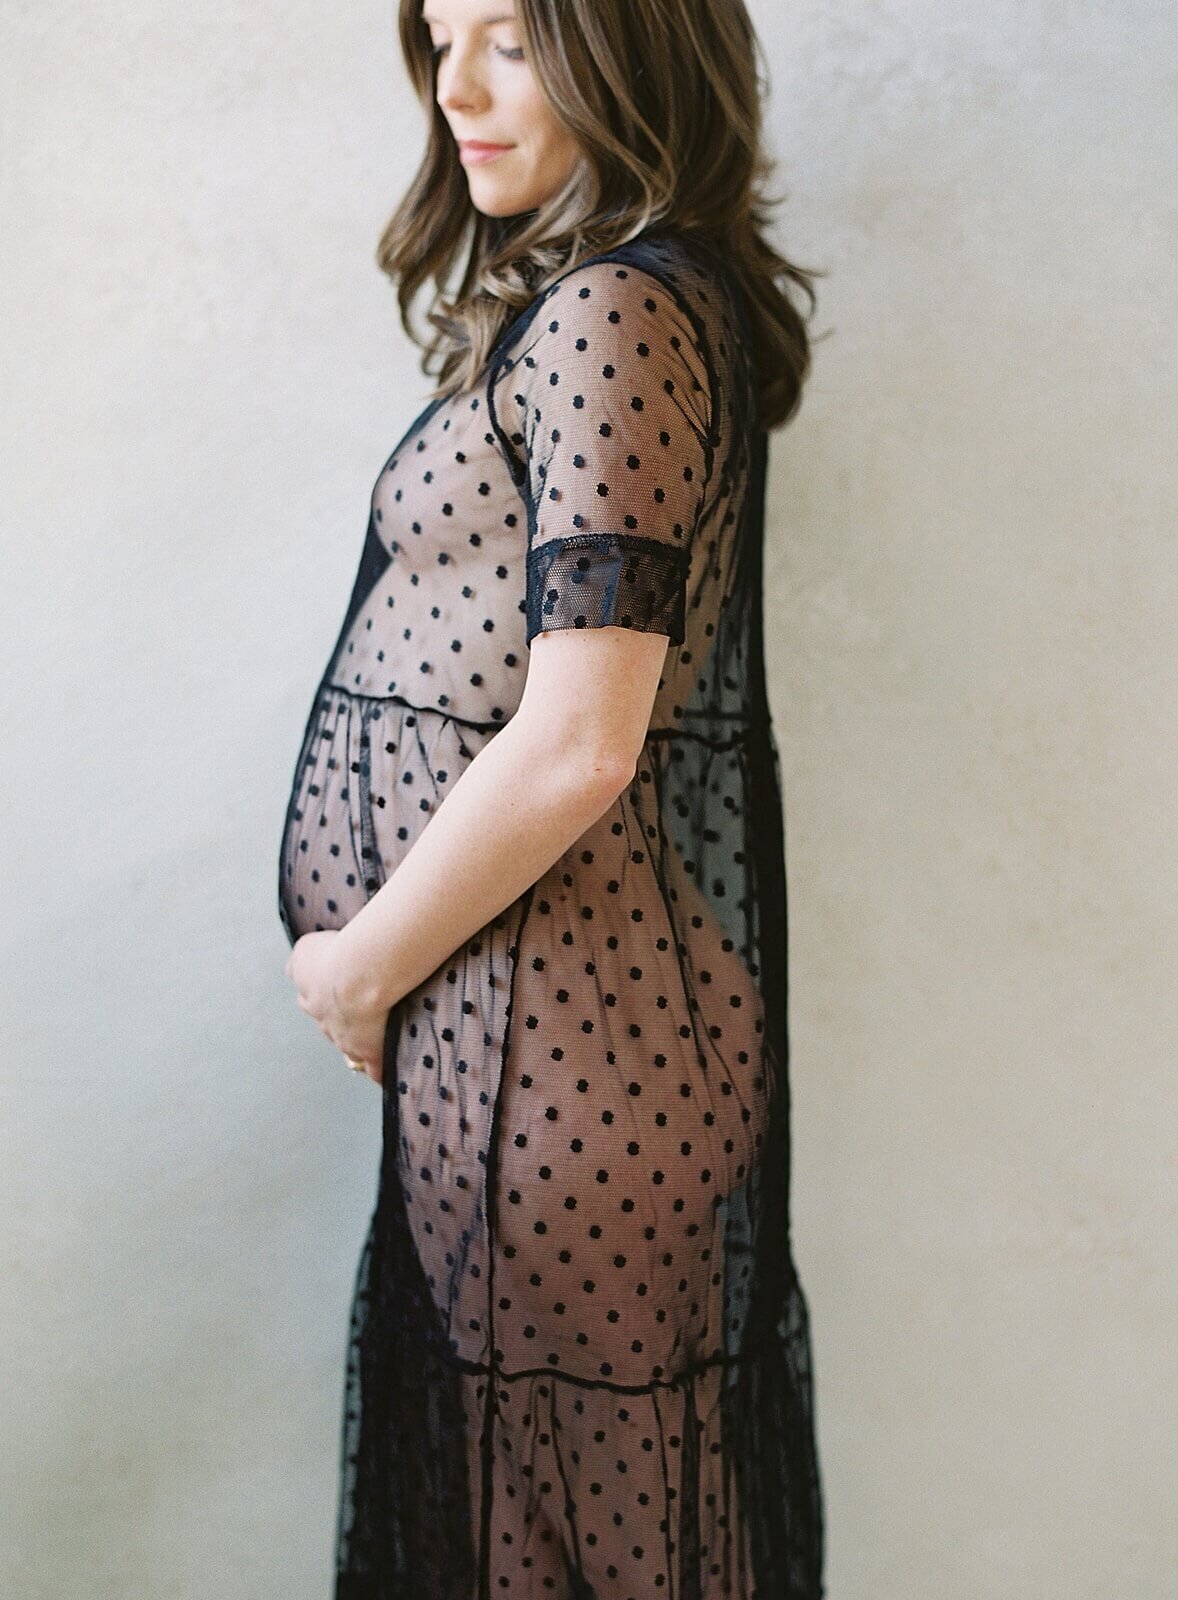 seattle-maternity-photographer-jacqueline-benet_0038